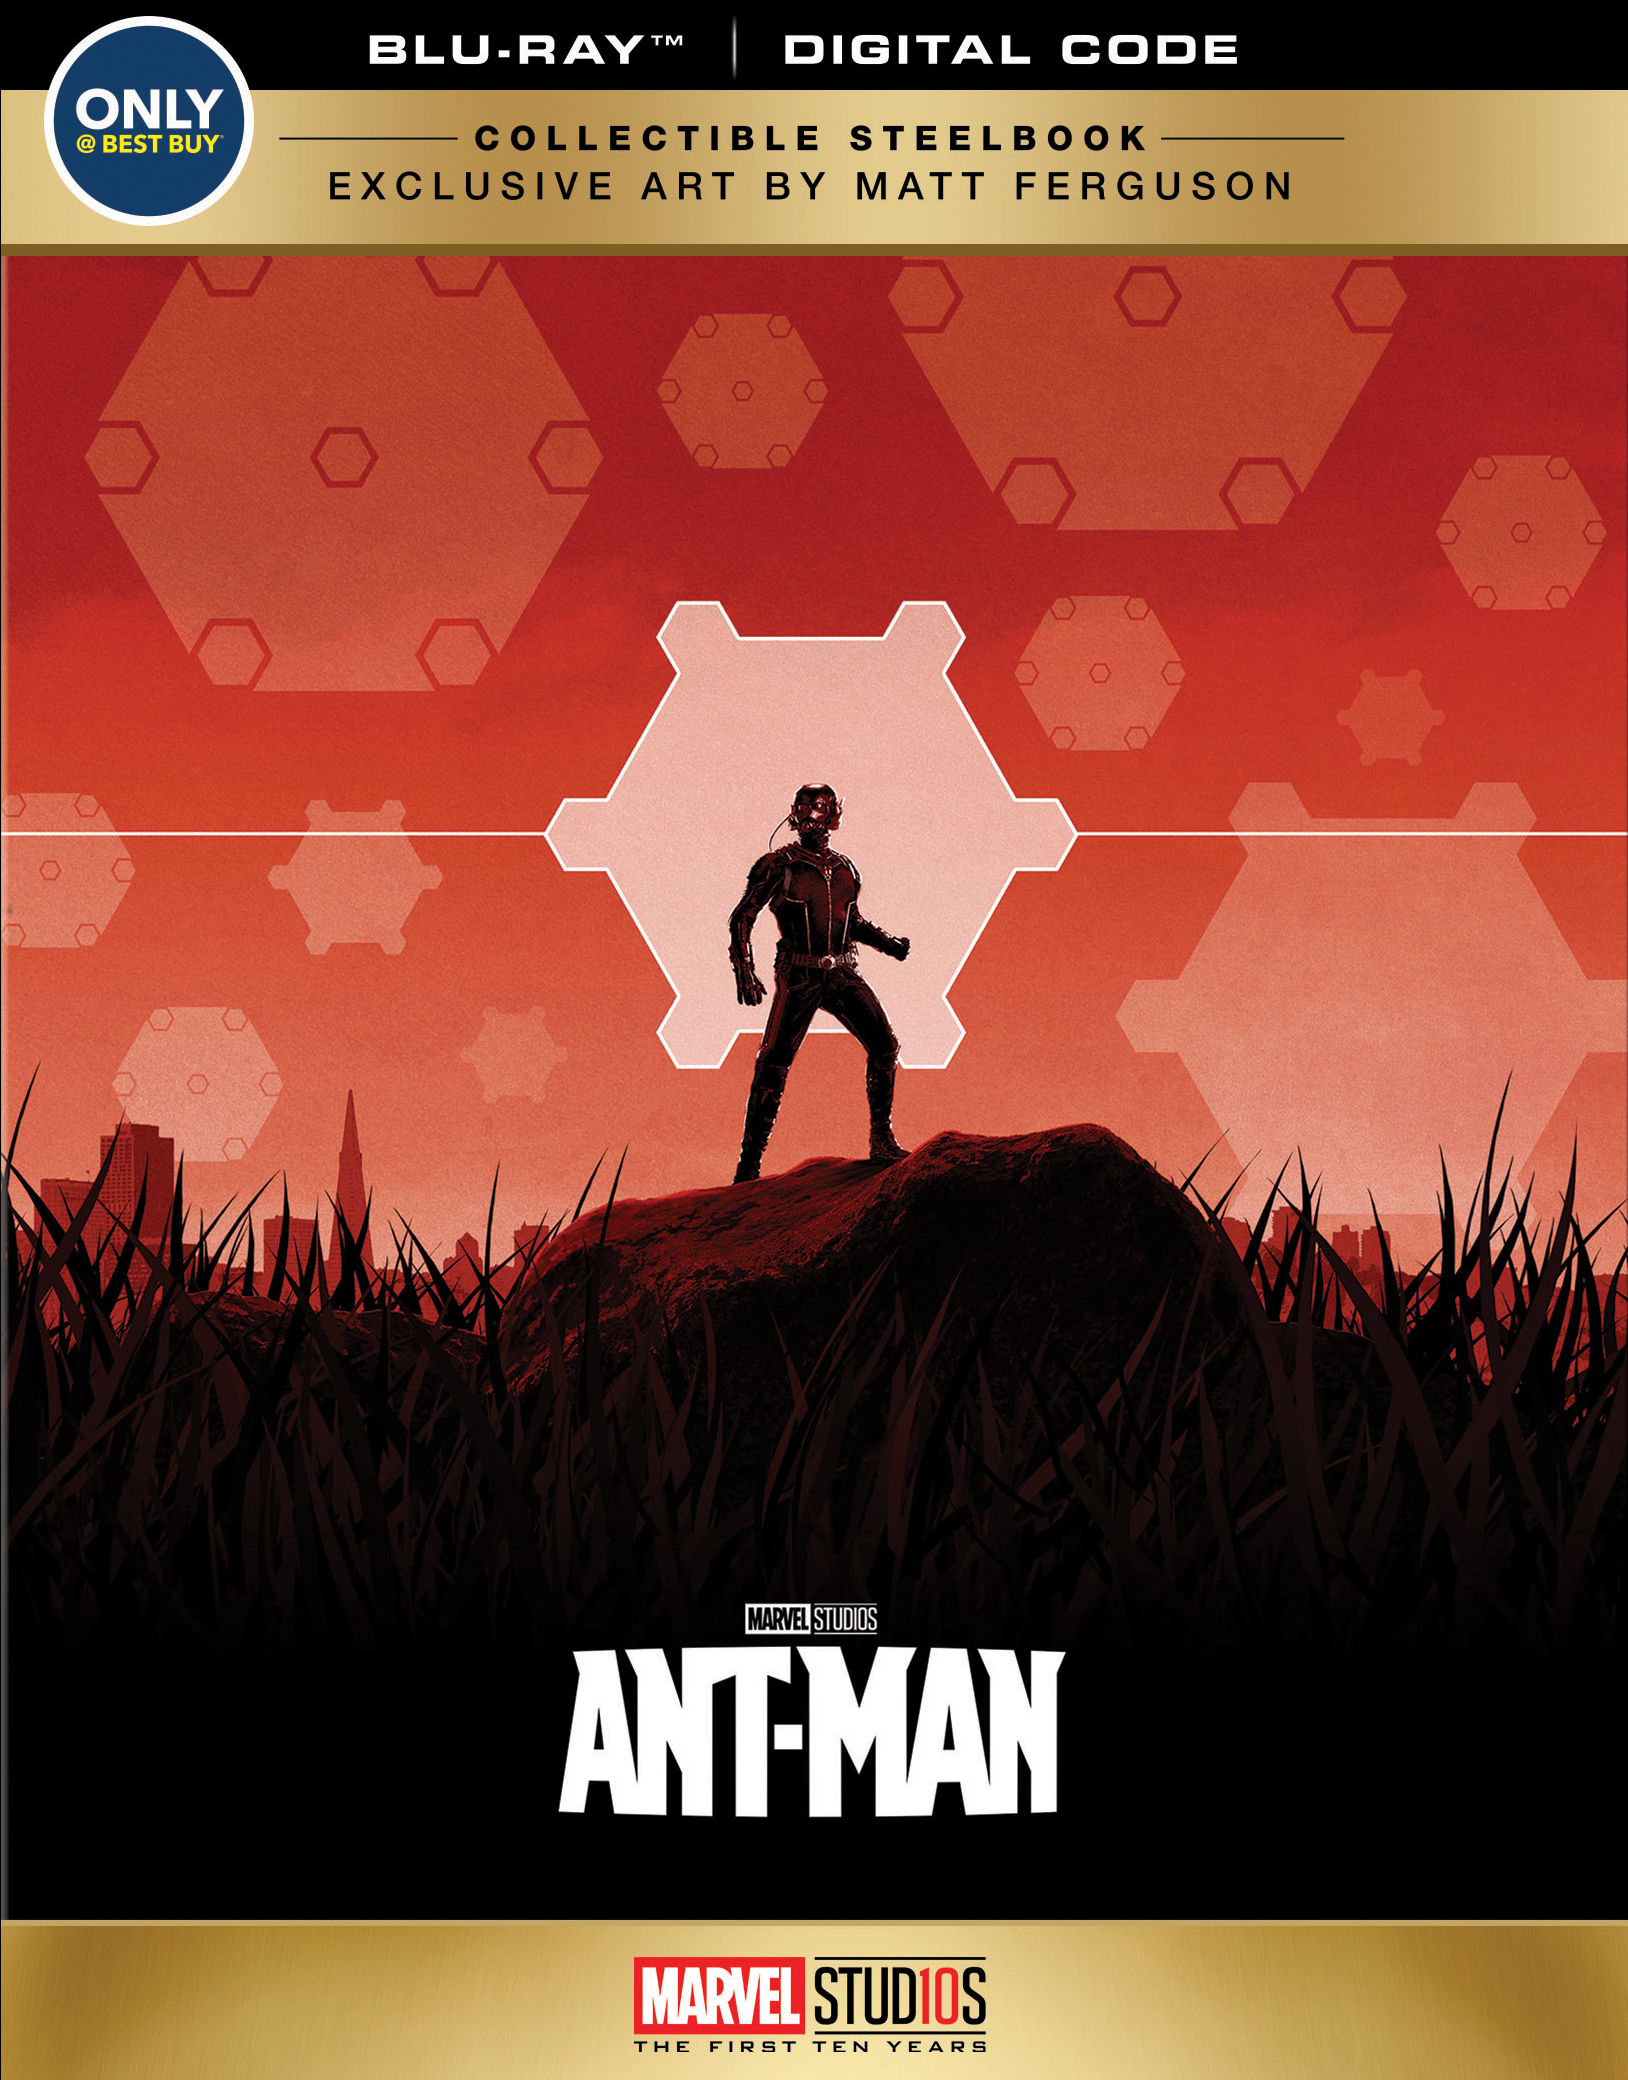 Ant-Man [SteelBook] [Blu-ray] [Only @ Best Buy] [2015]